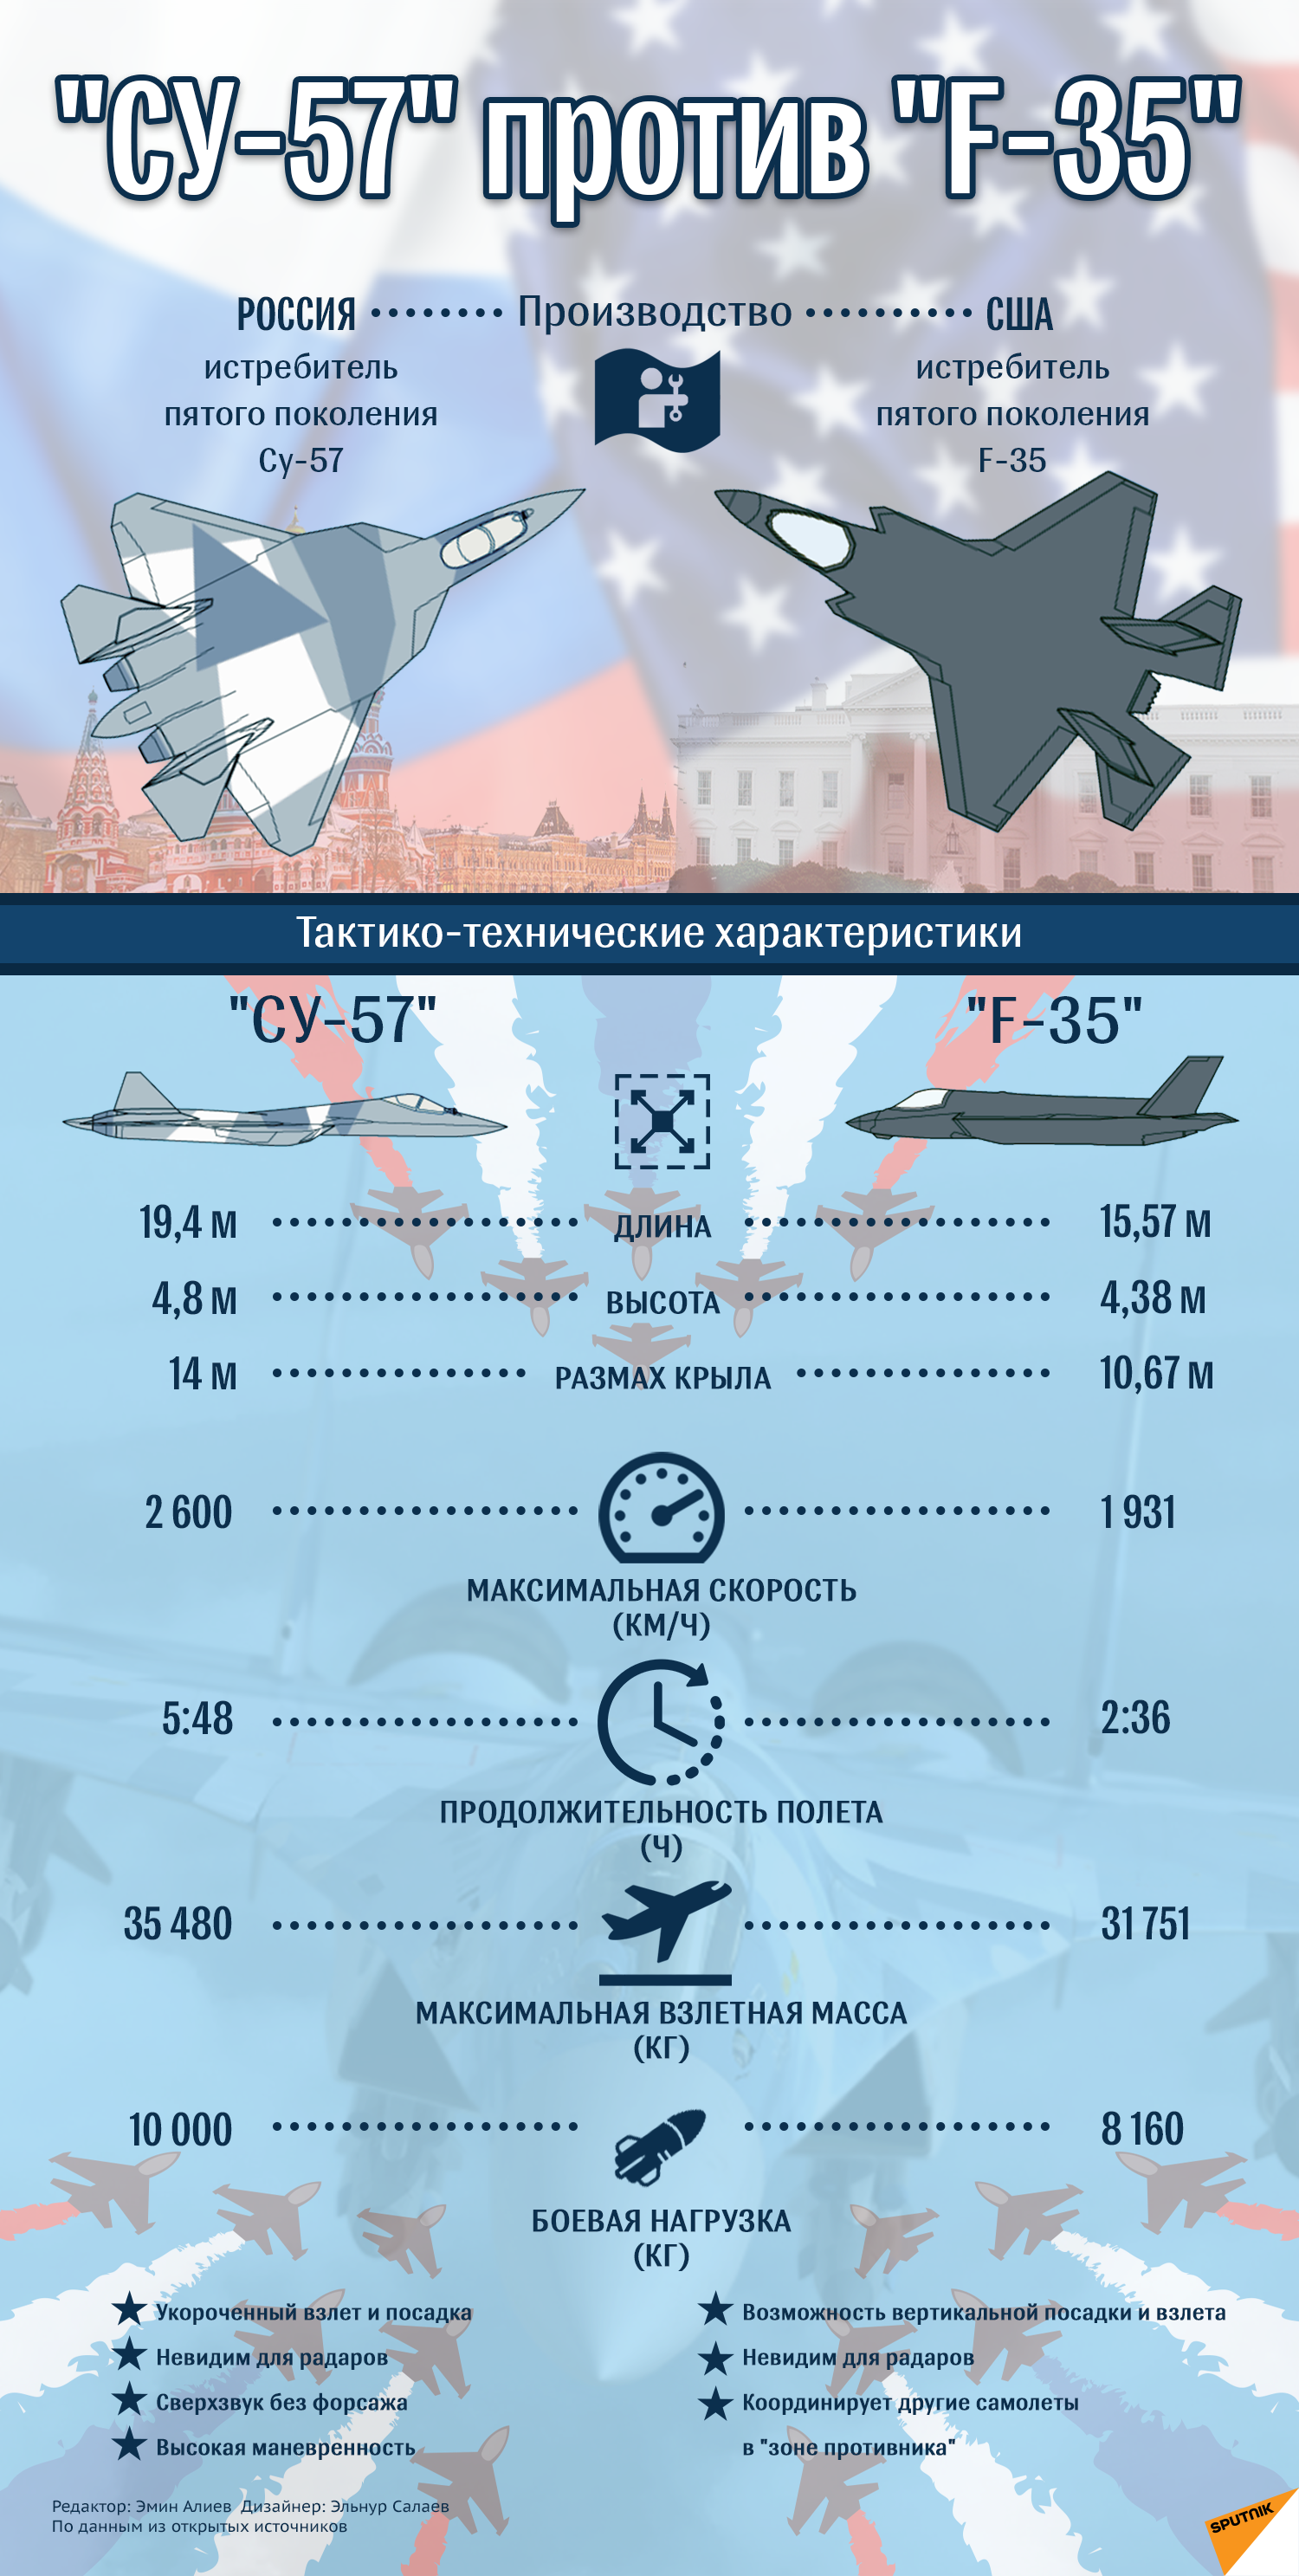 Инфографика Истребители - Sputnik Азербайджан